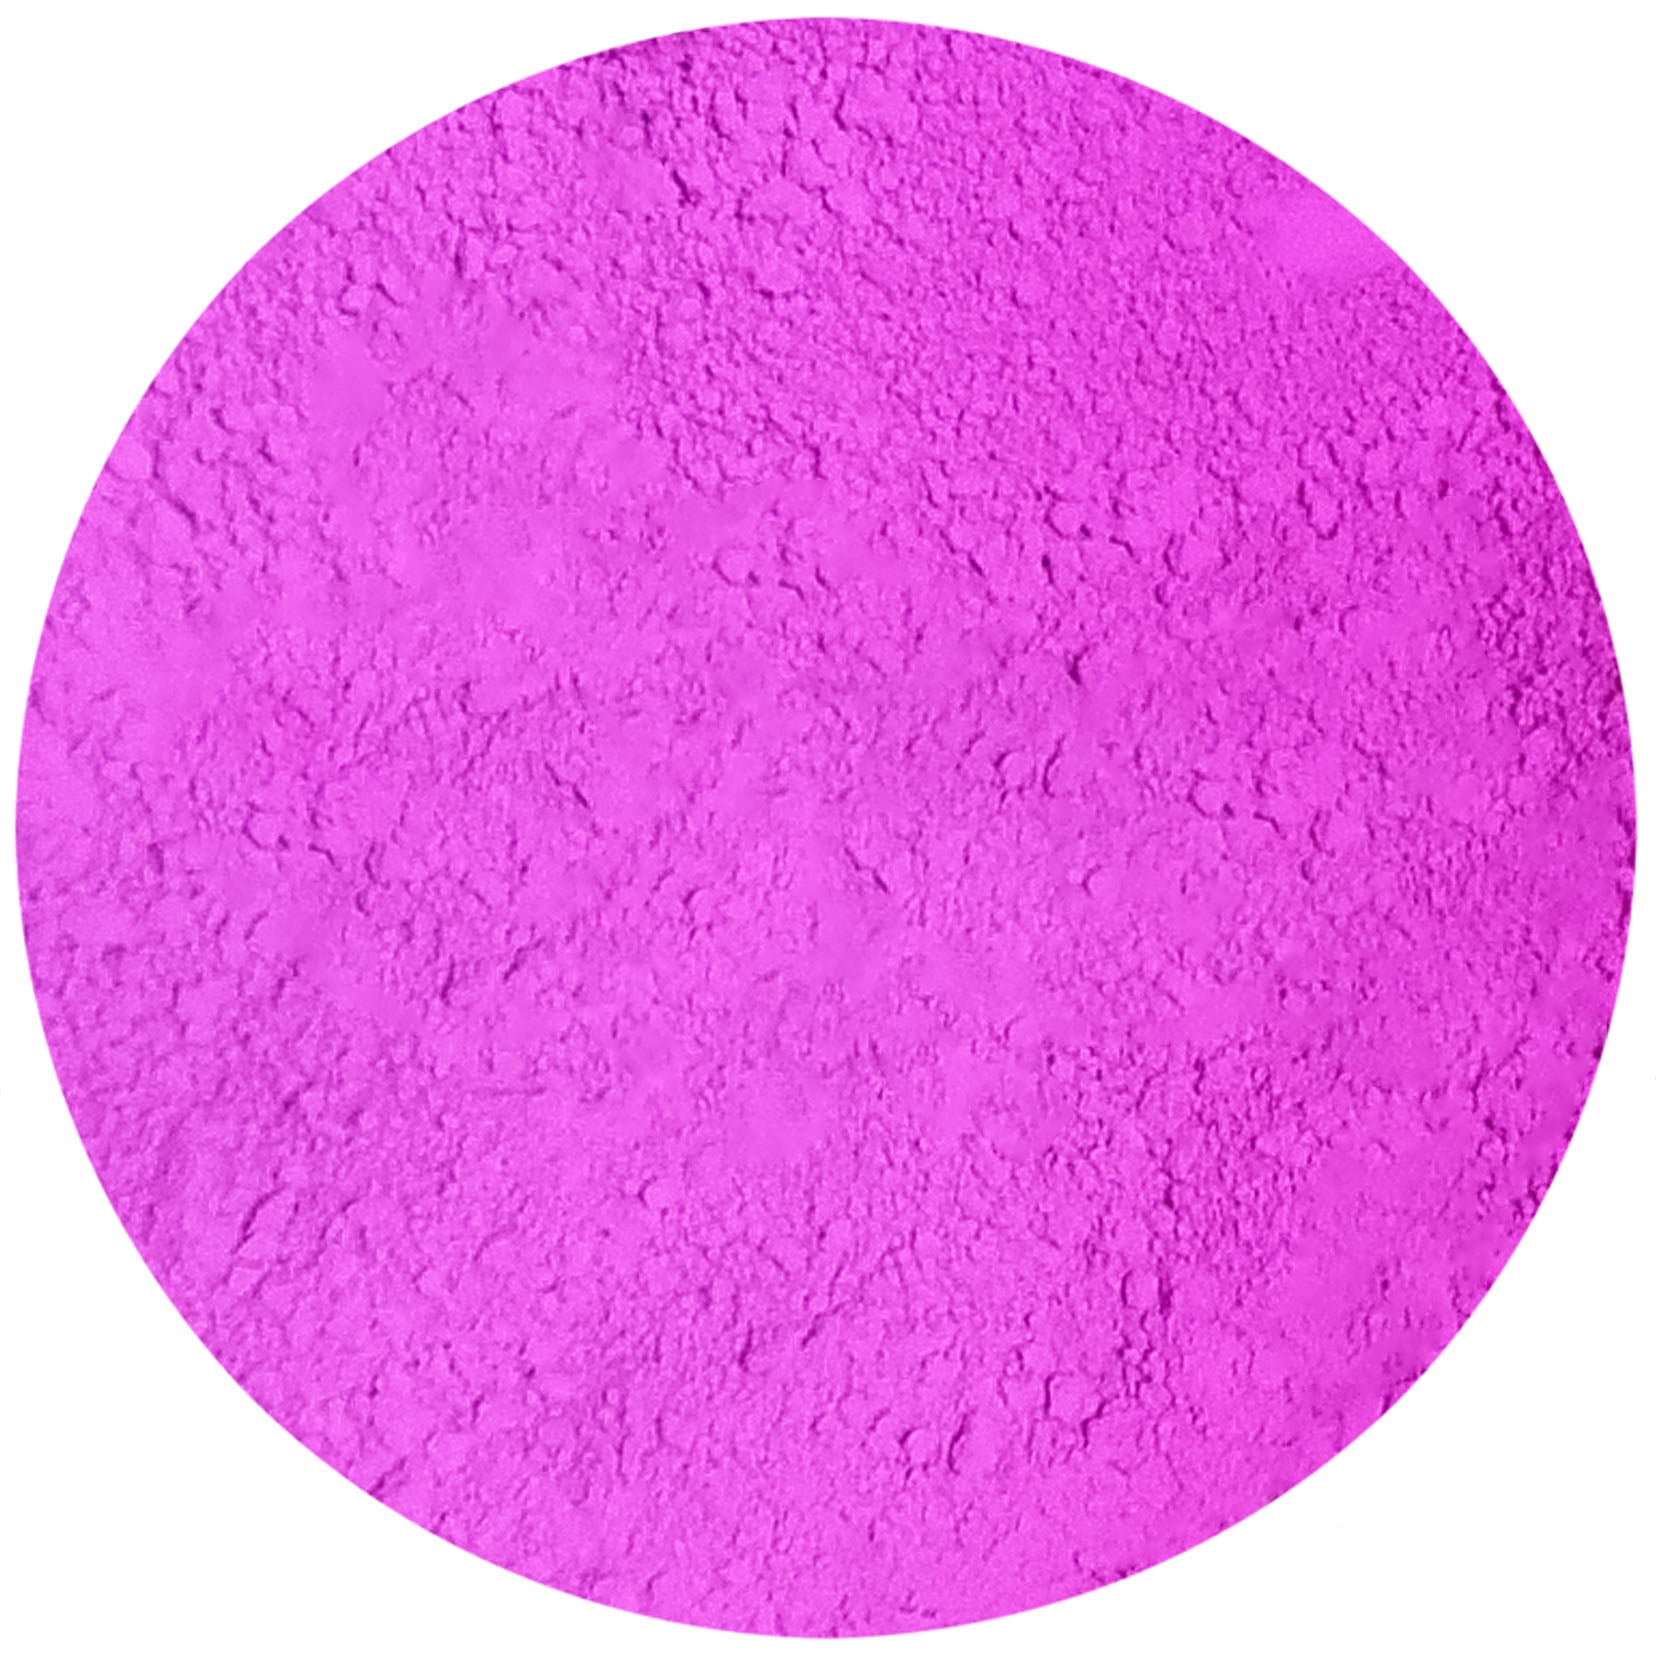 Neon Purple | Fluorescent Pigment Dye | Candles, Wax Melt, Cosmetics, Bath Bombs, Shower Gel | Truly Personal